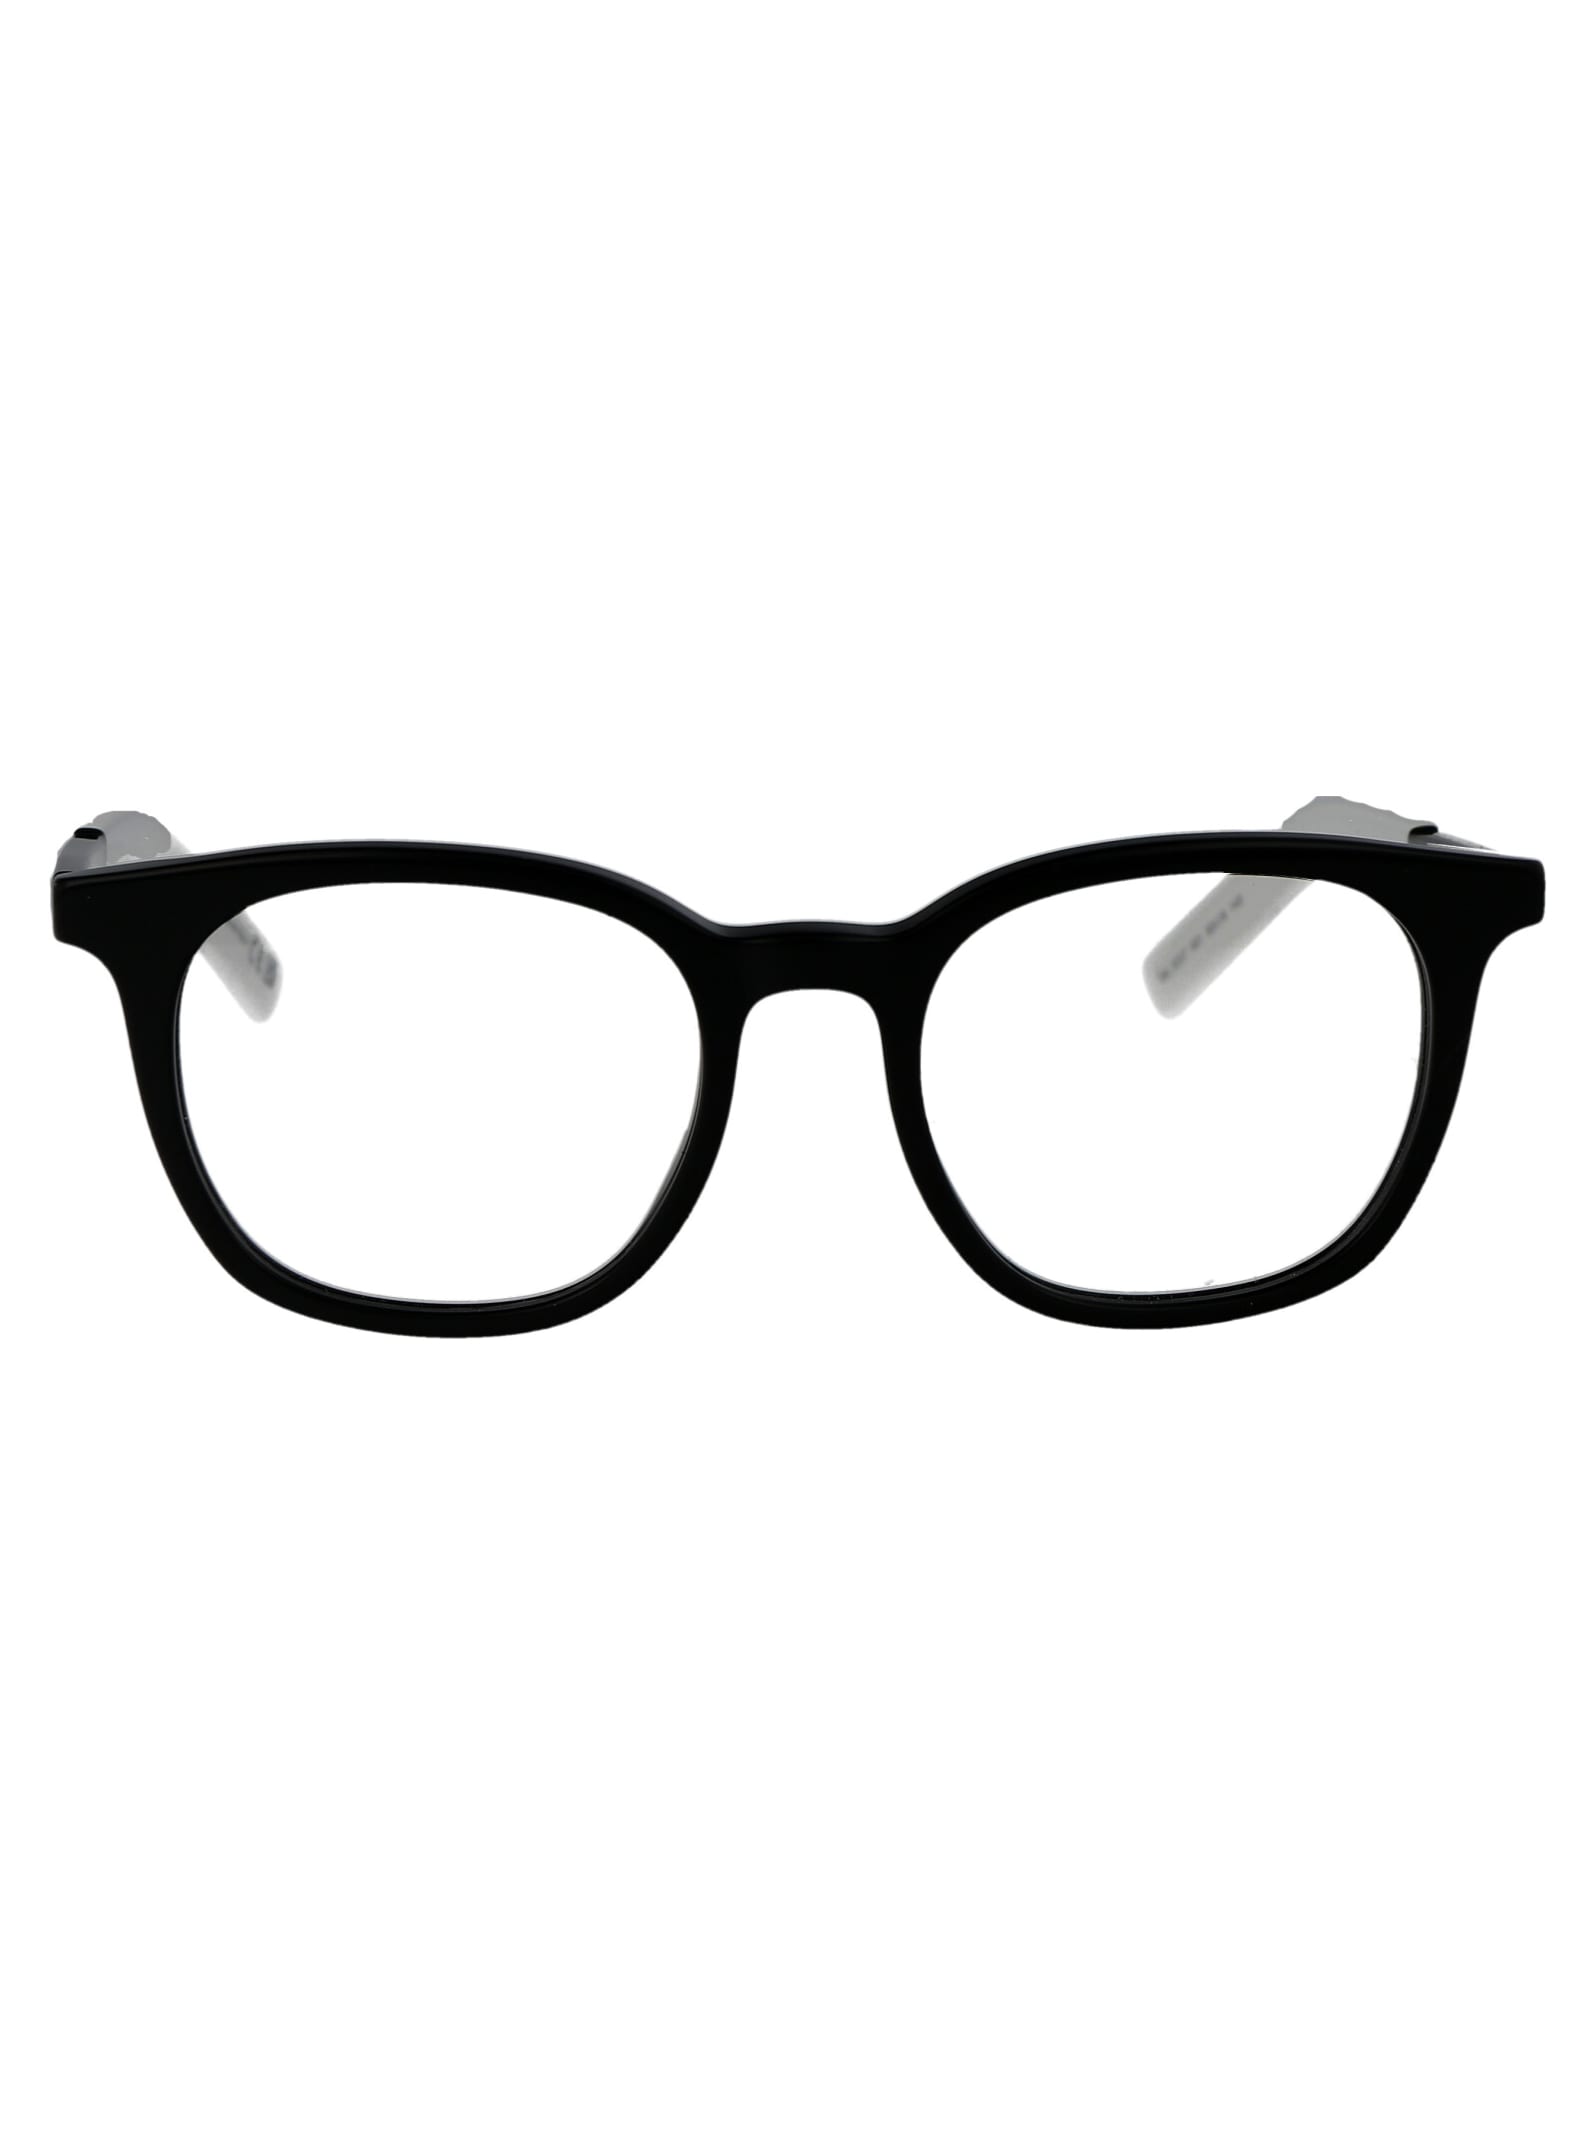 Ml5207 Glasses